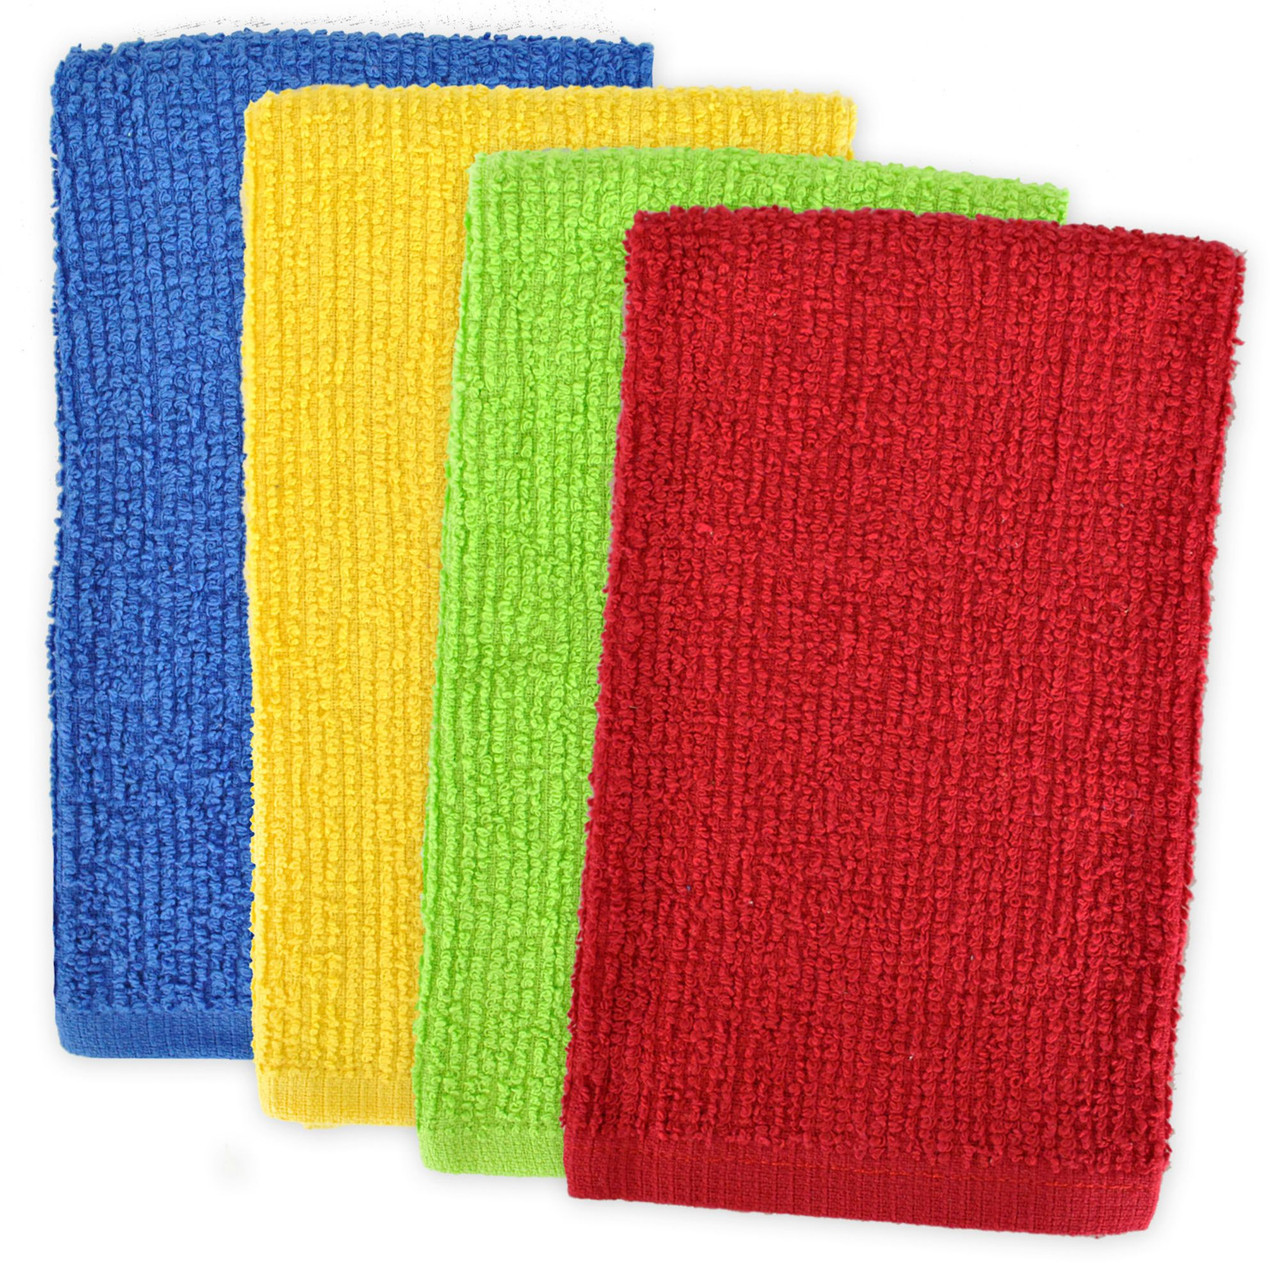 Colorful Dish Towels 